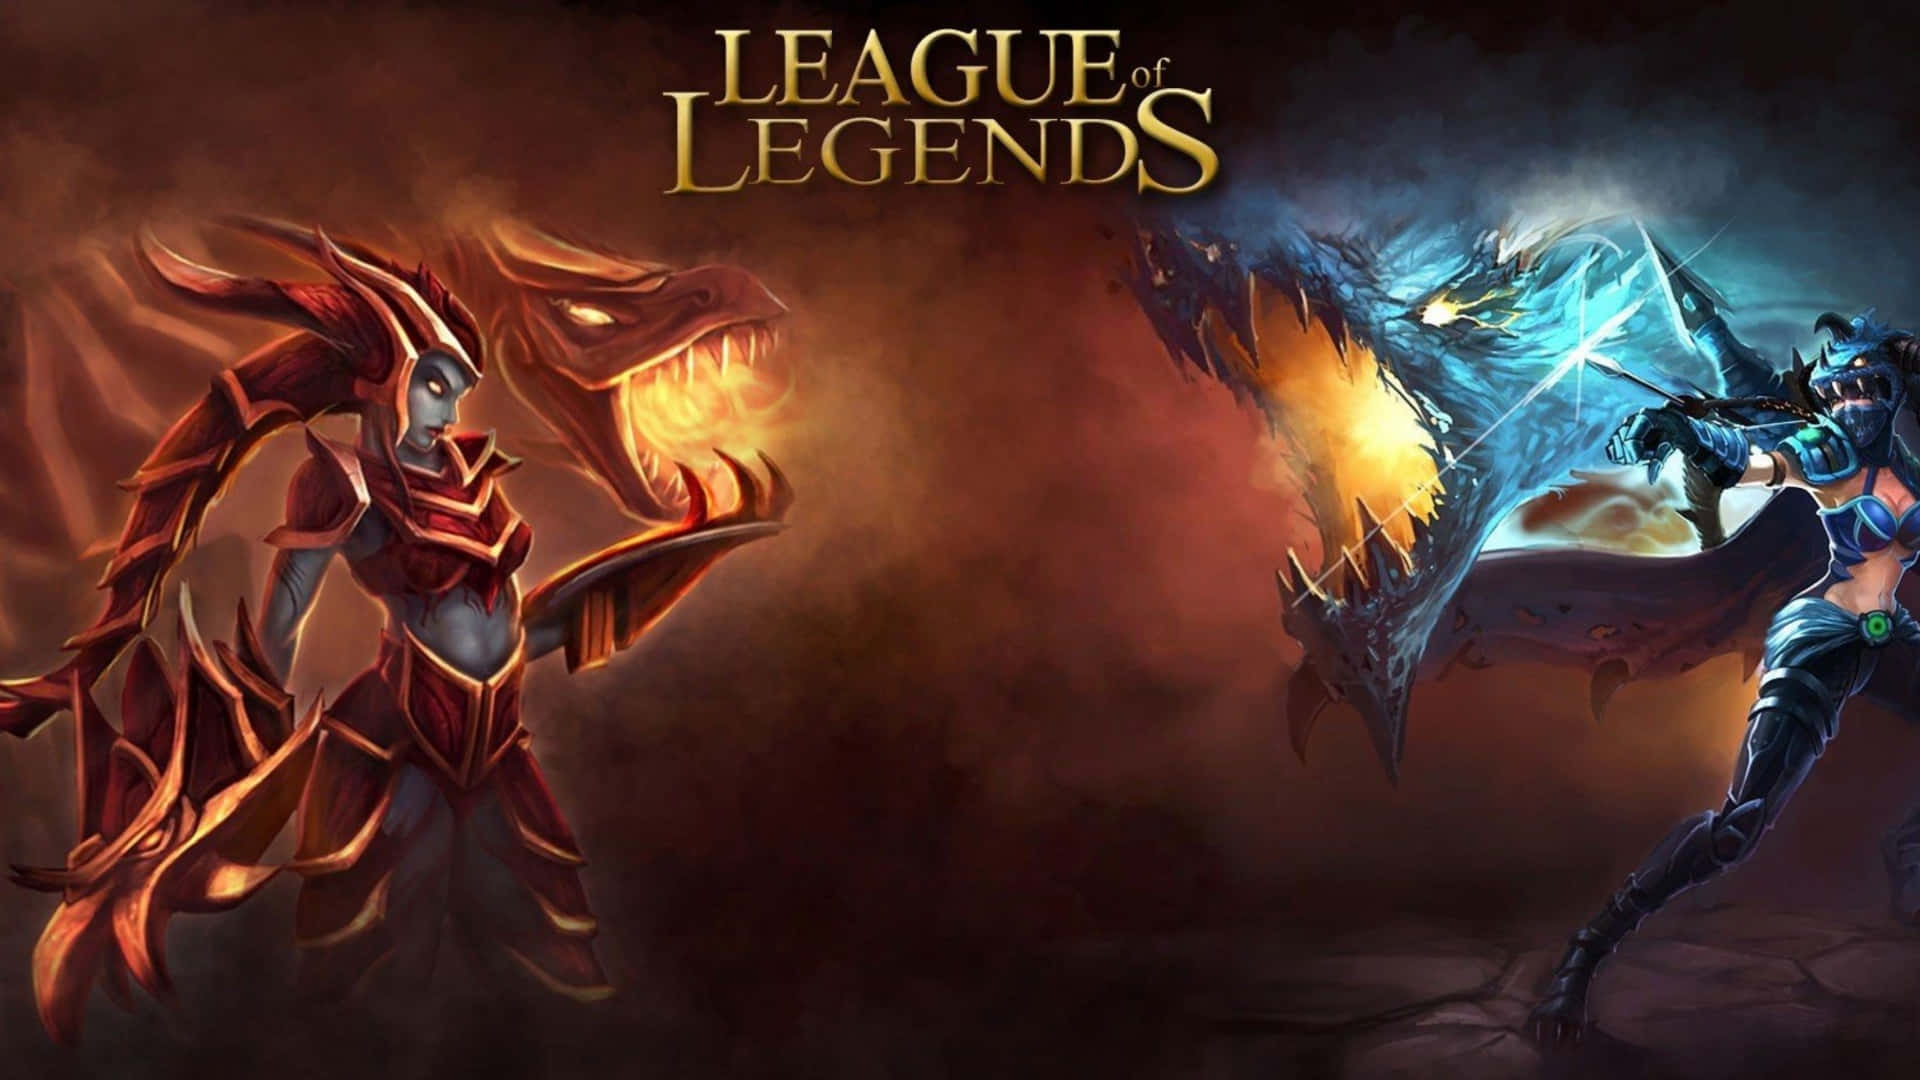 Visdin Evne I League Of Legends!